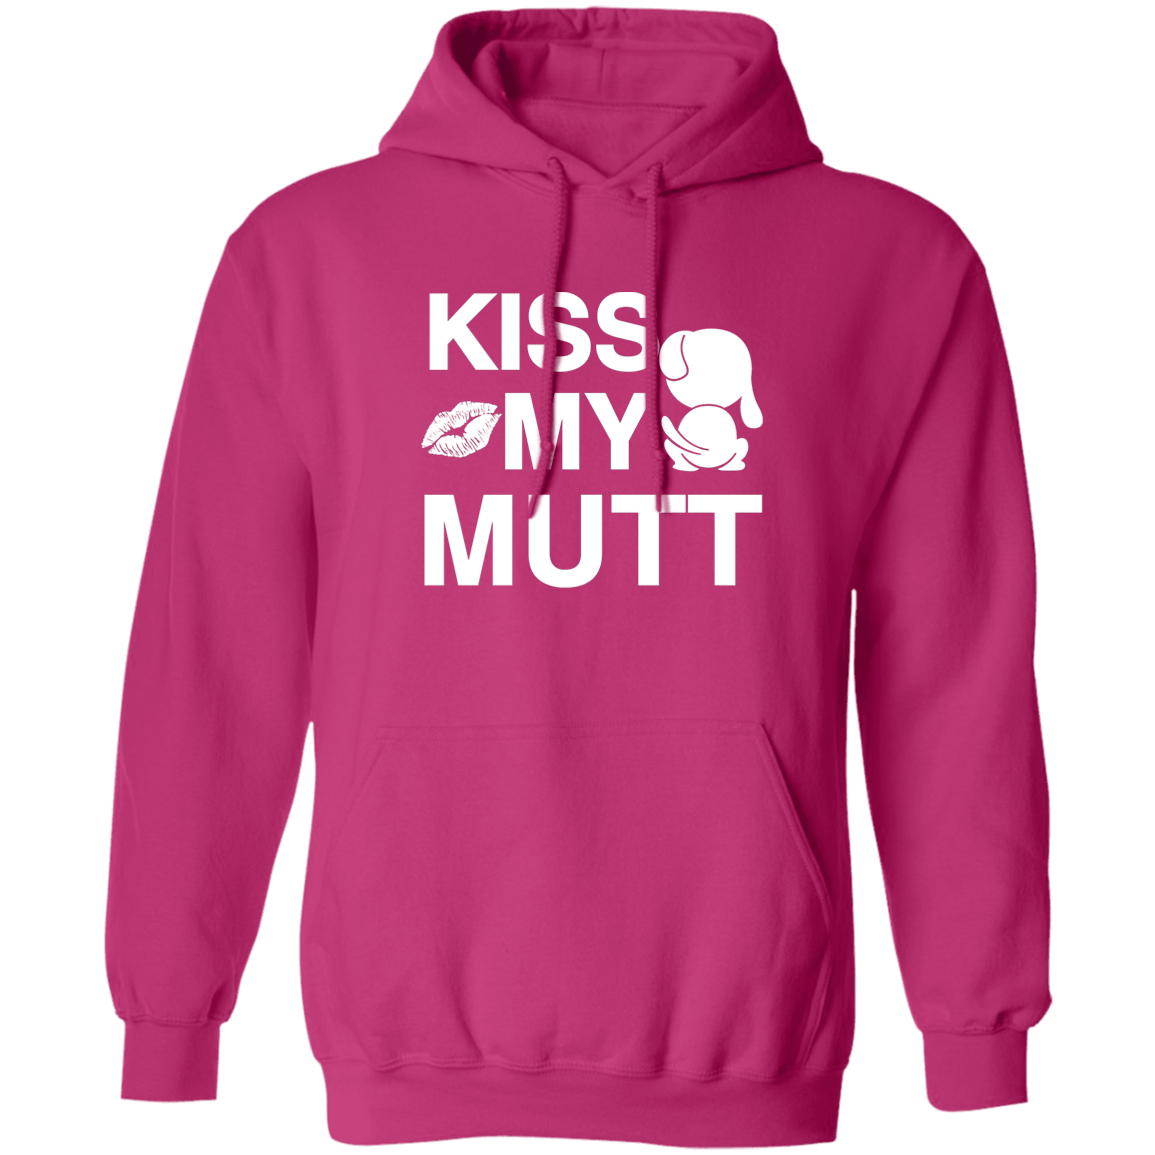 Kiss My Mutt - Hoodie.